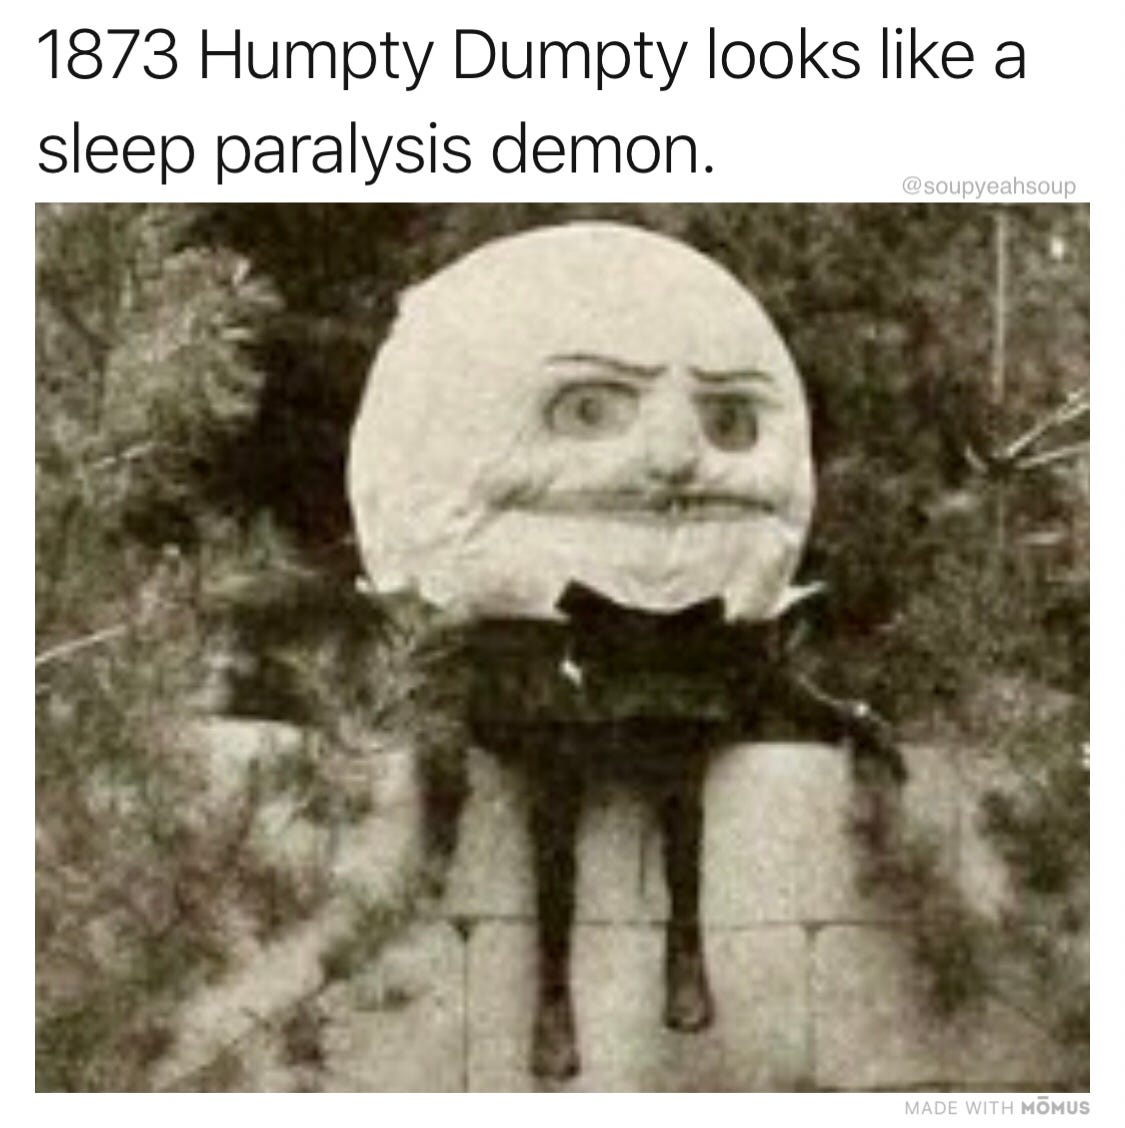 Creepy Humpty Dumpty - humpty dumpty post - Imgur